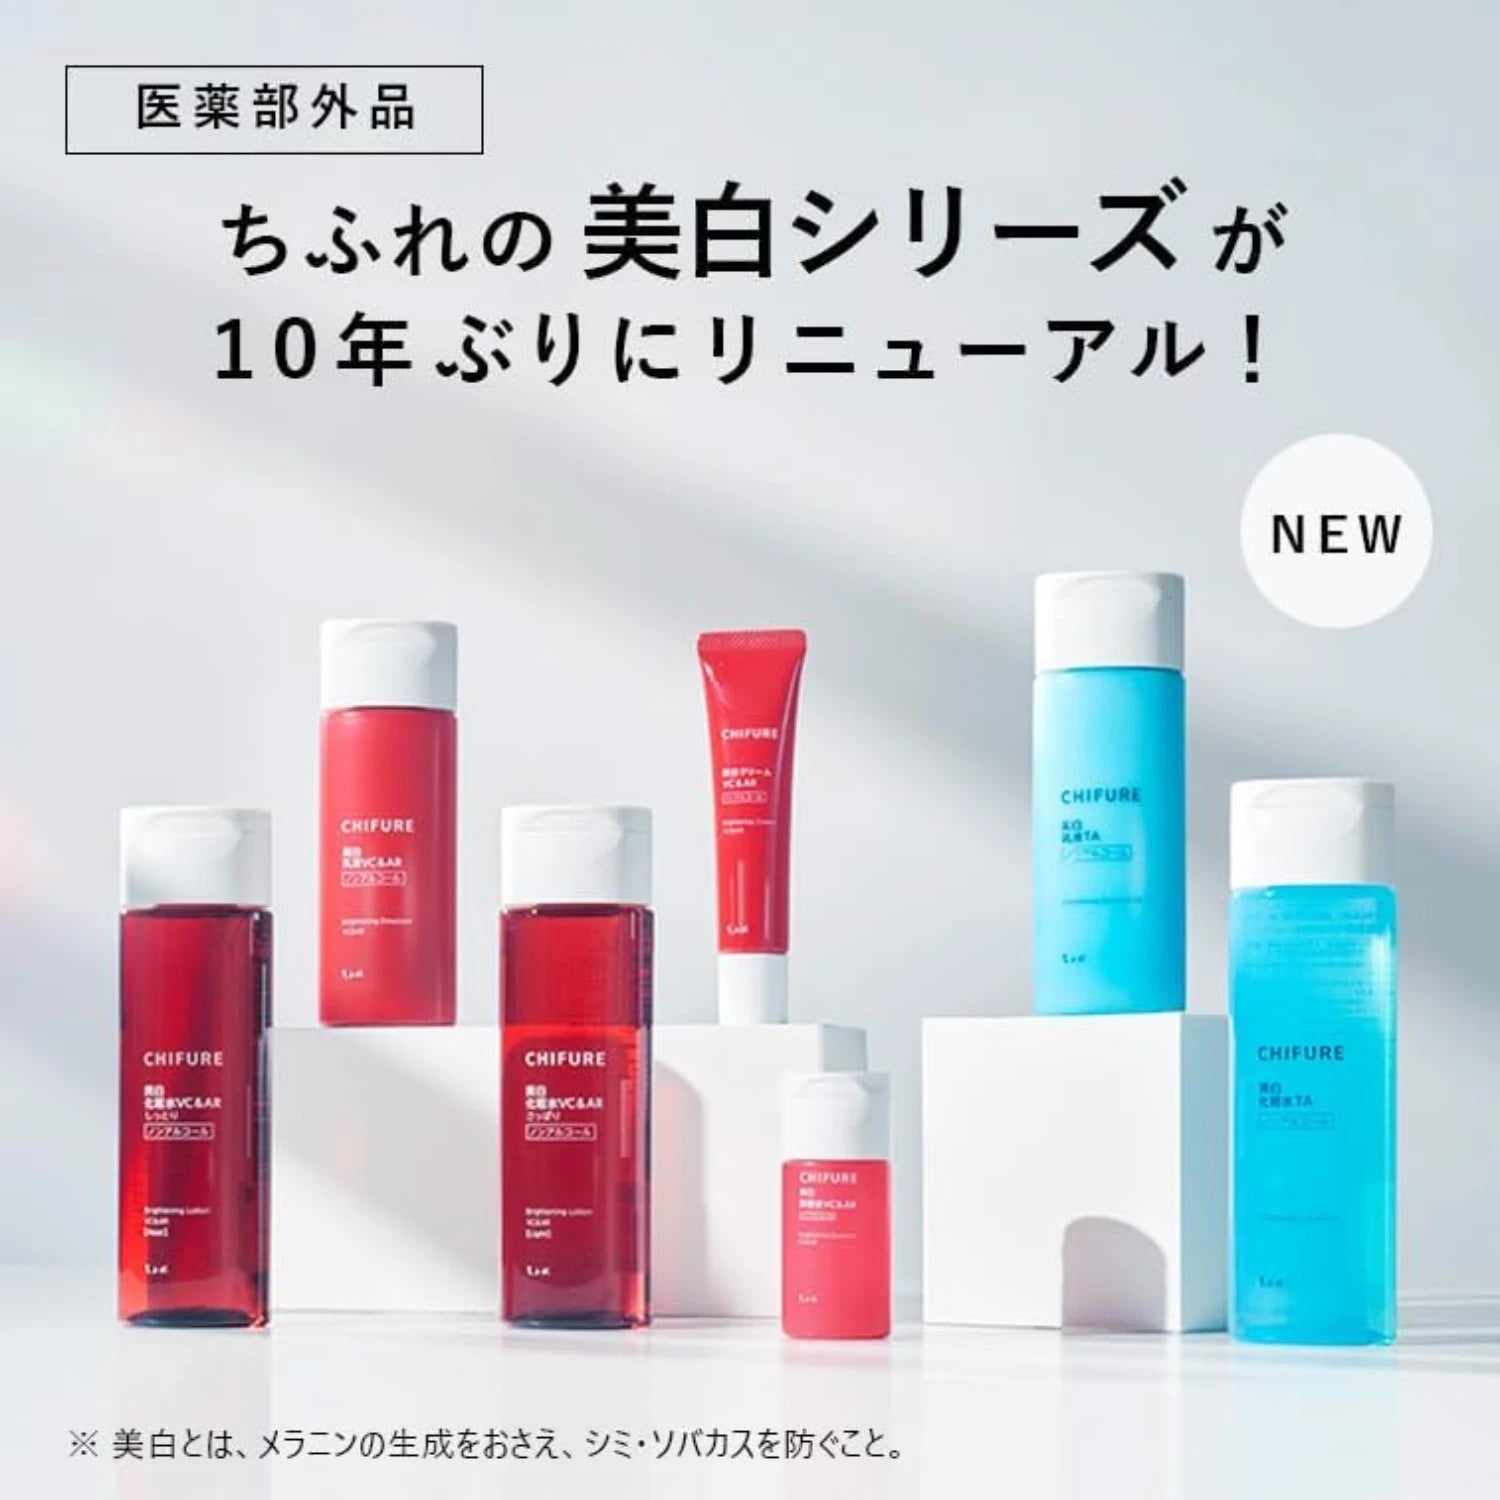 Chifure Brightening Lotion Tranexamic Acid 180ml - Buy Me Japan